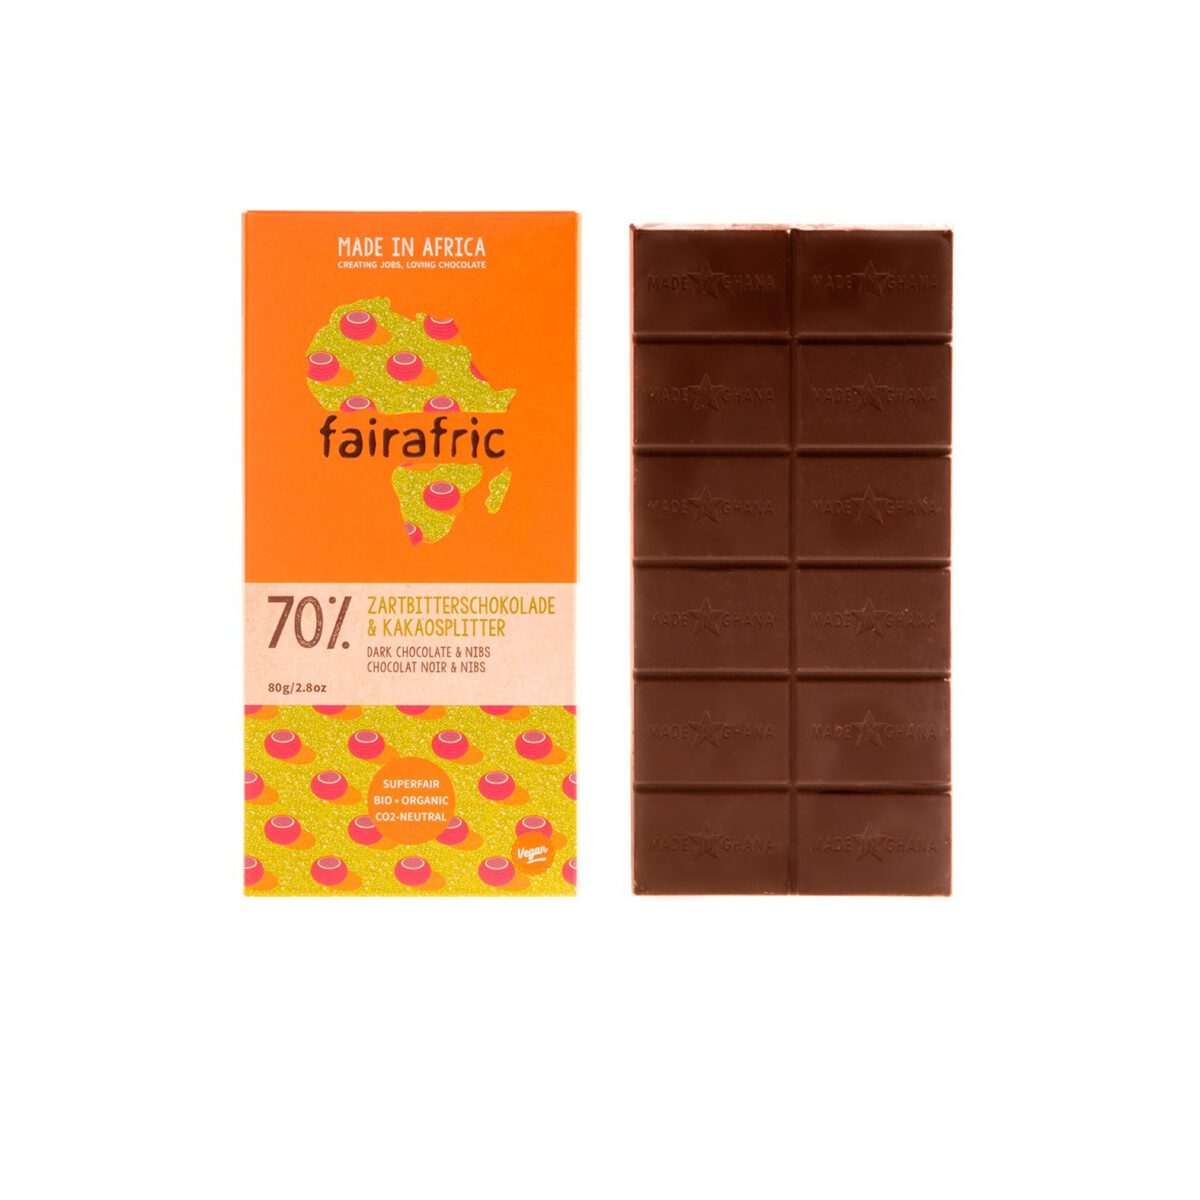 Bio_chocolade_70%_Nibs_Fairafric